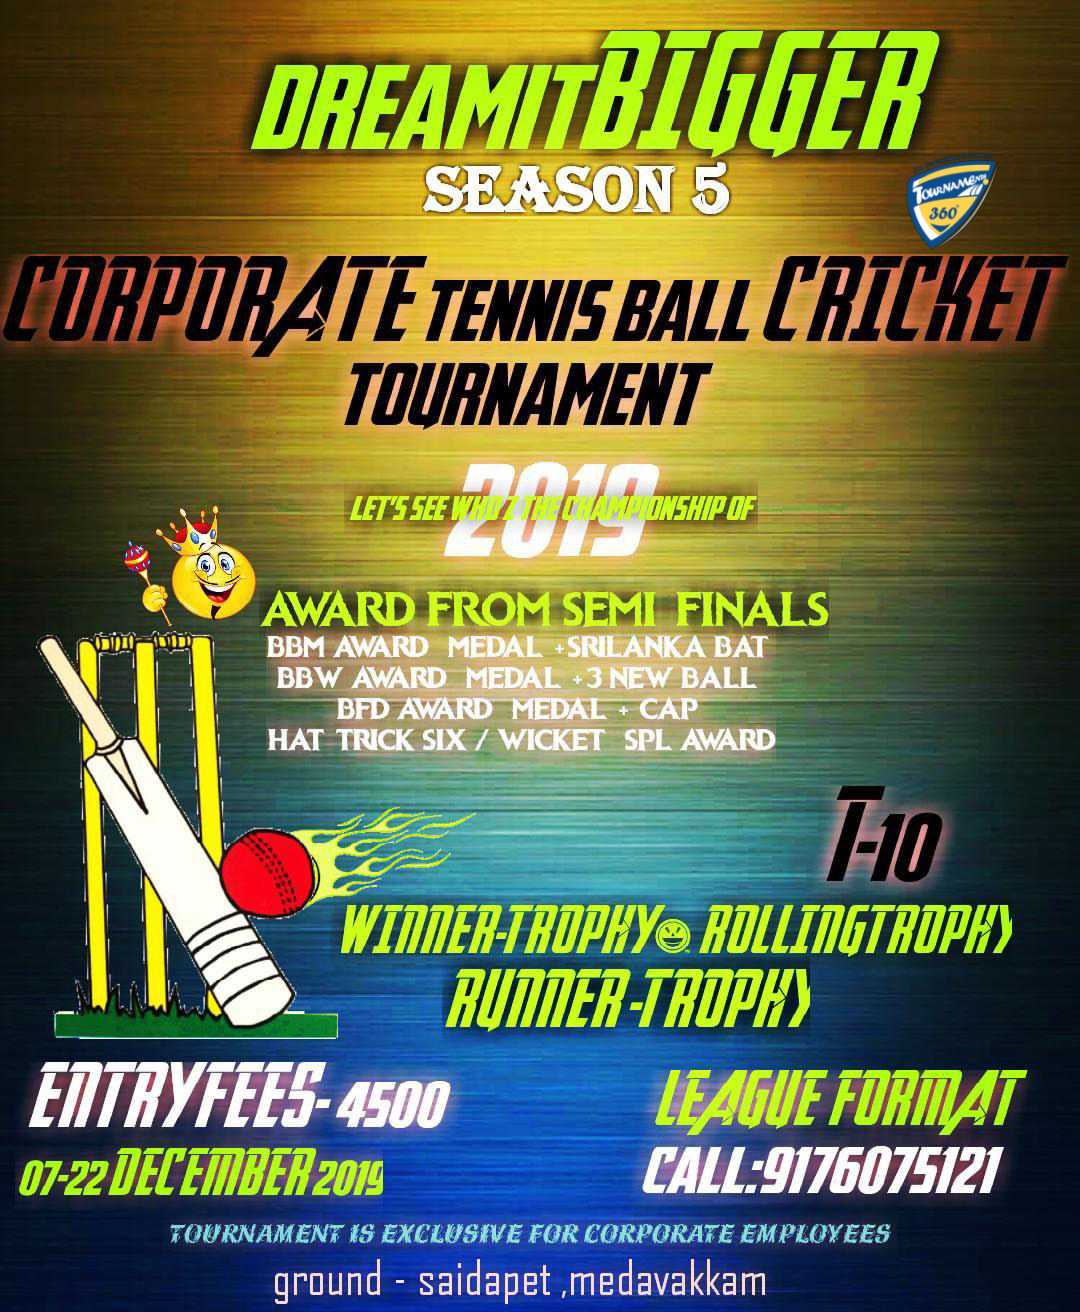 Corporate Tennis Ball Cricket Tournament